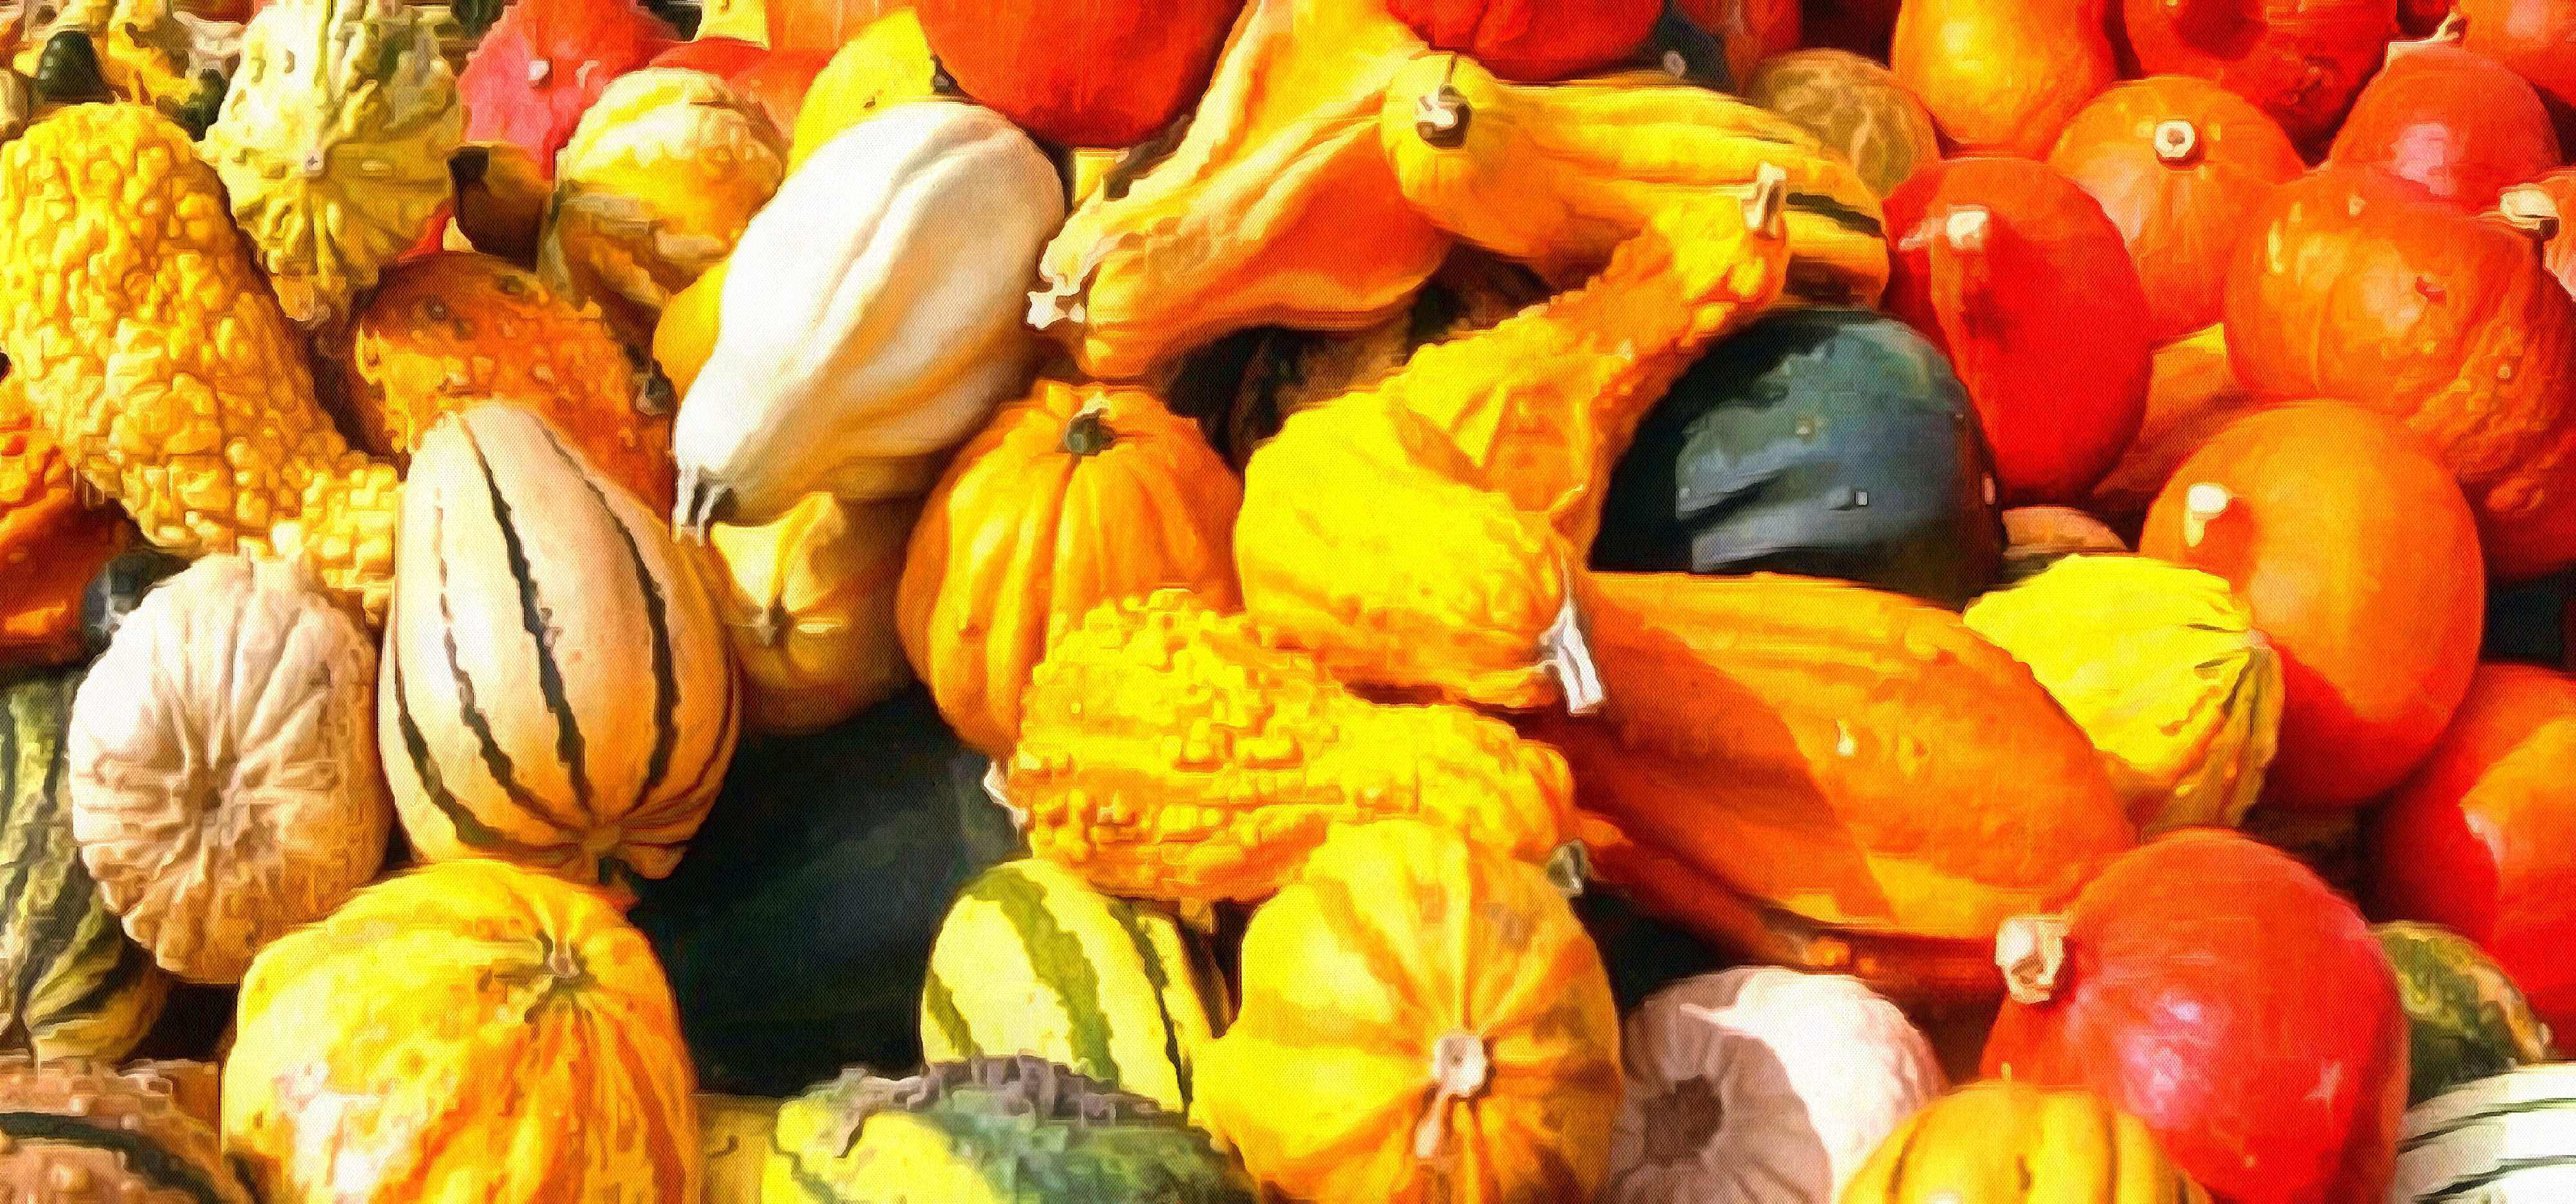 pumpkin, wheelbarrow, cart, trade, tray, stall, holiday, lots of pumpkins, garden, spooky, halloween -  stock free photos, public domain images, download free images, free stock images, public domain